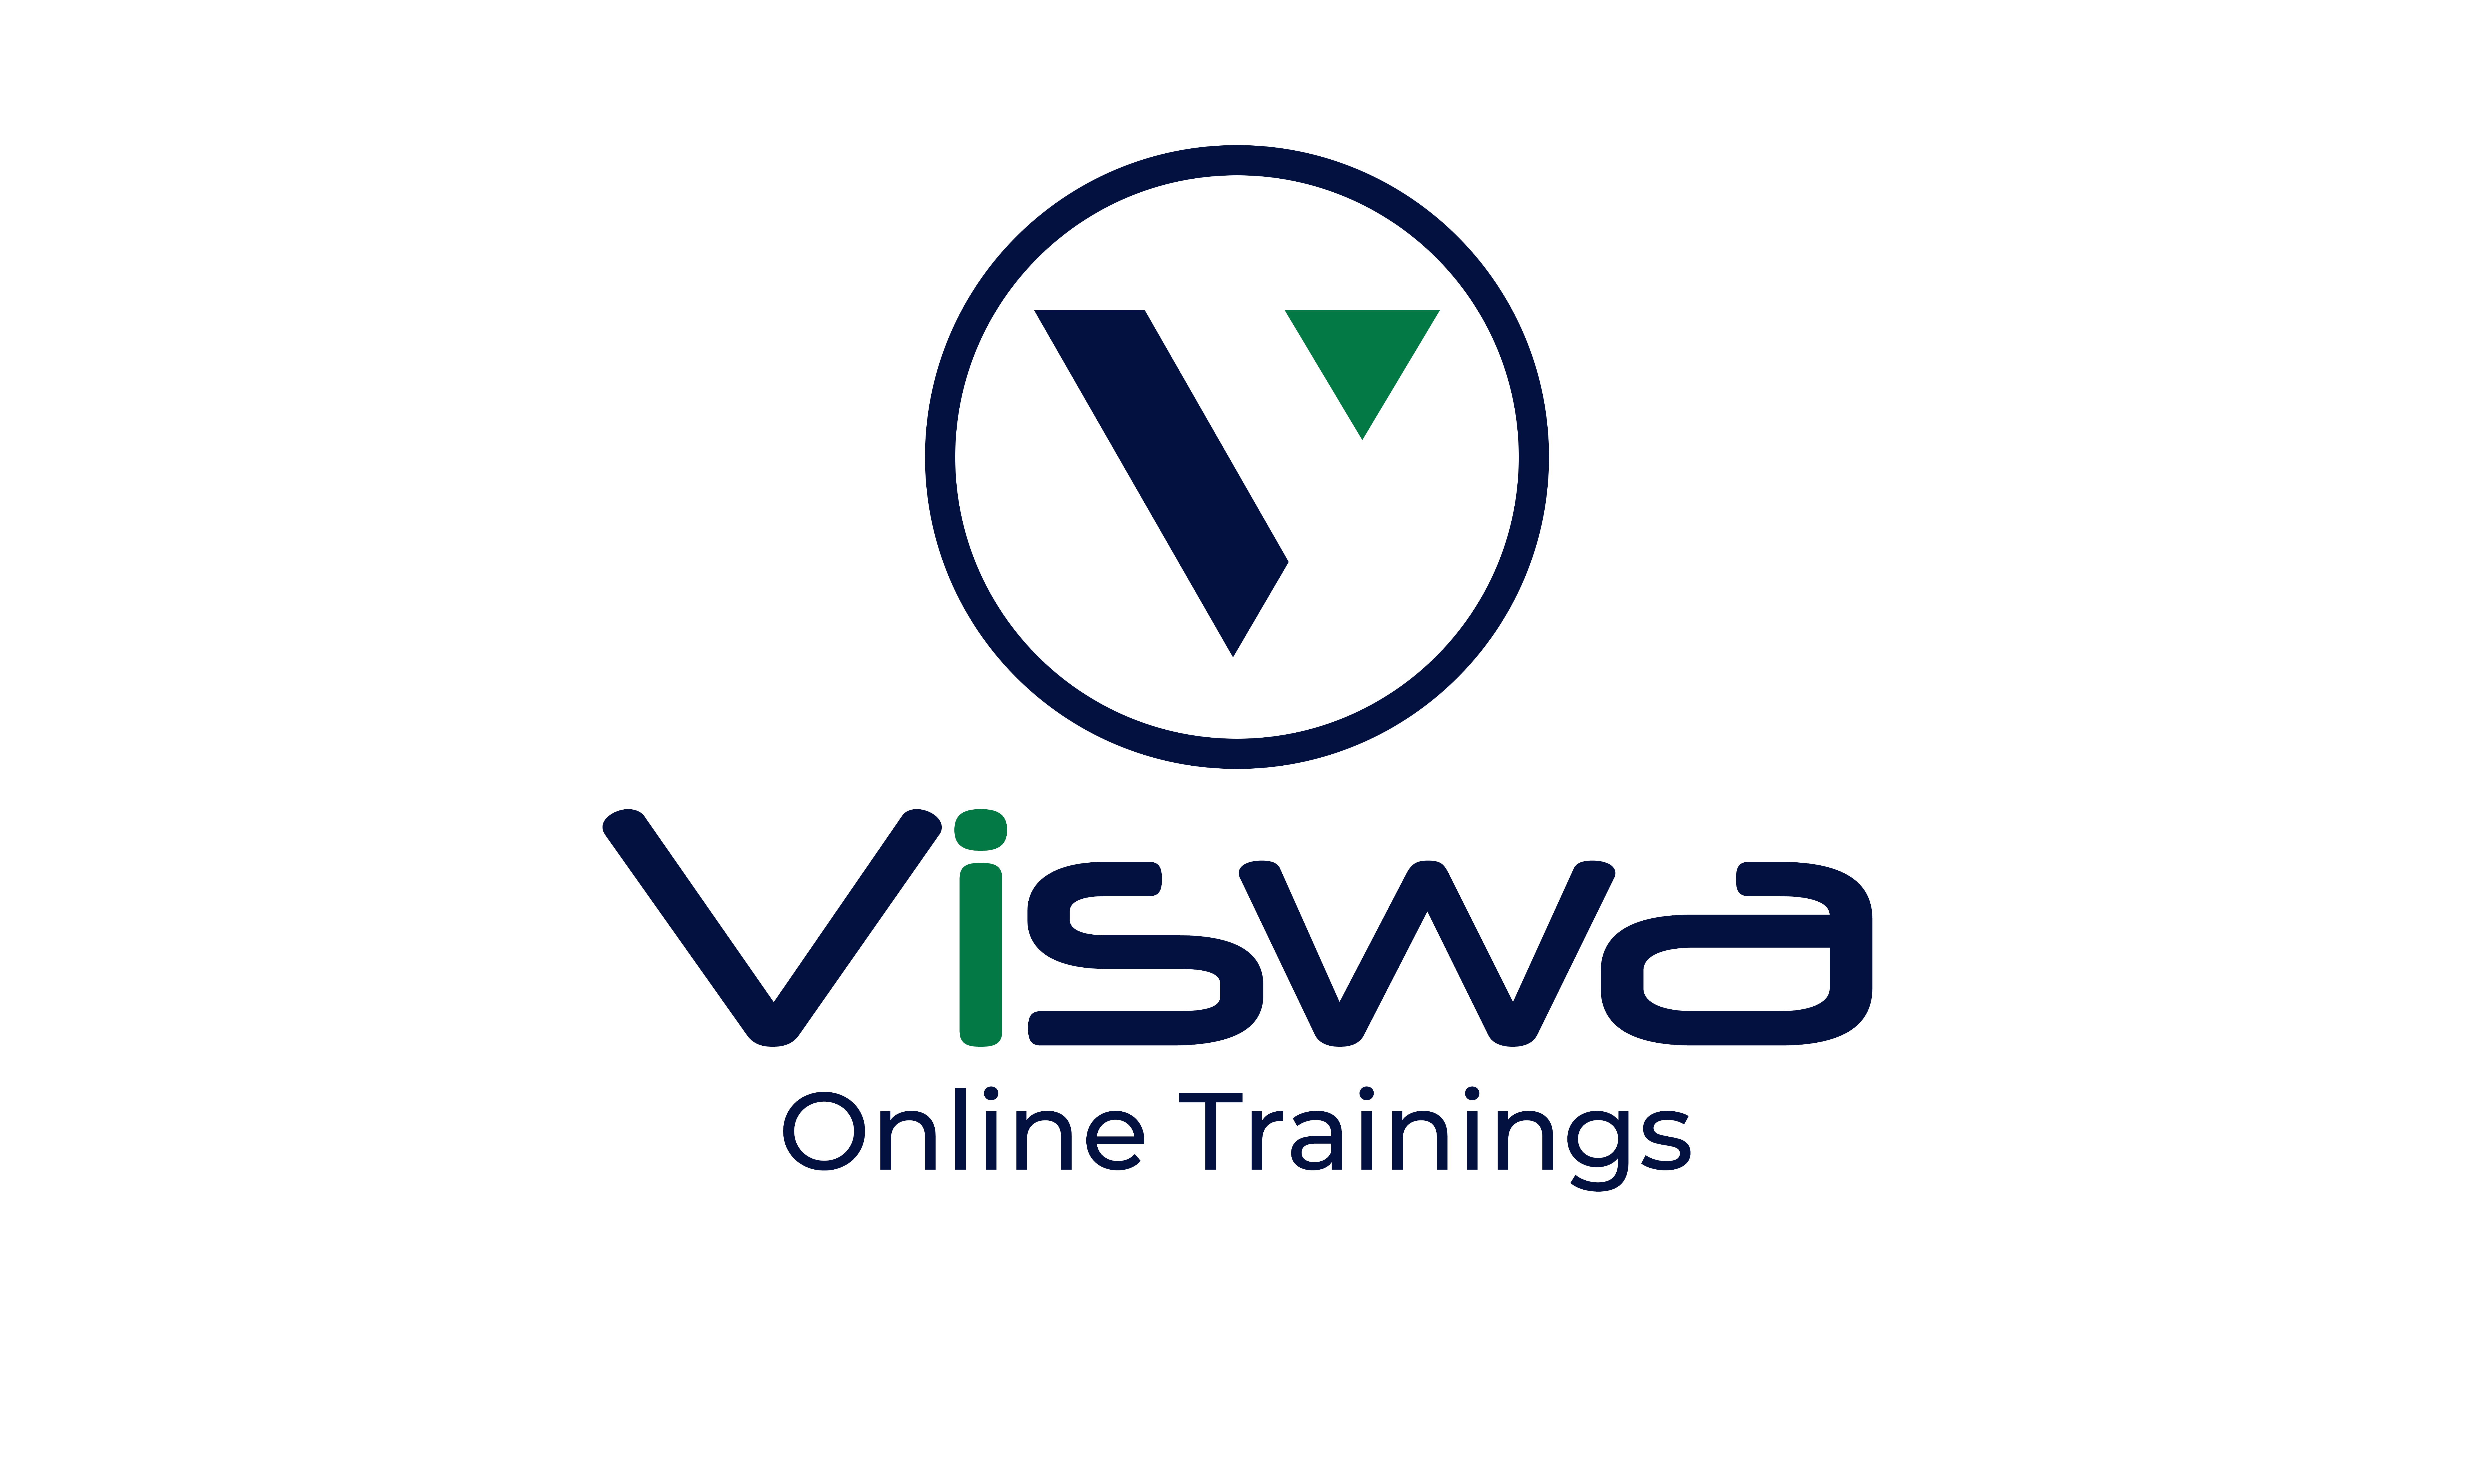 VISWA Online Trainings|Schools|Education